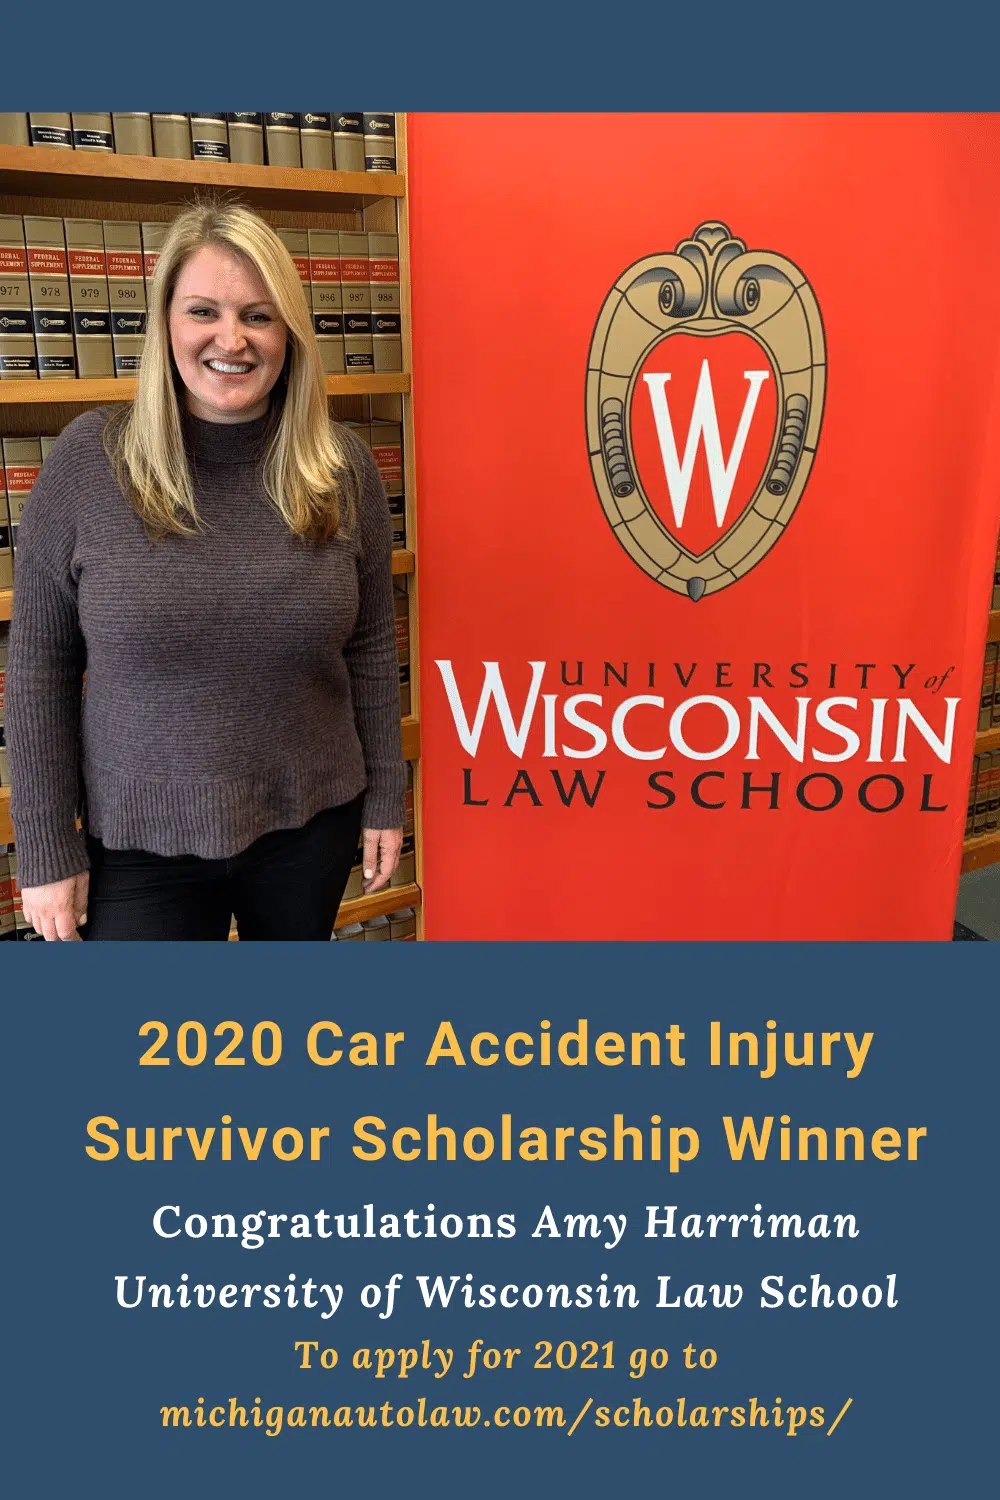 Michigan Auto Law Car Accident Injury Survivor Scholarship 2020 winner announced